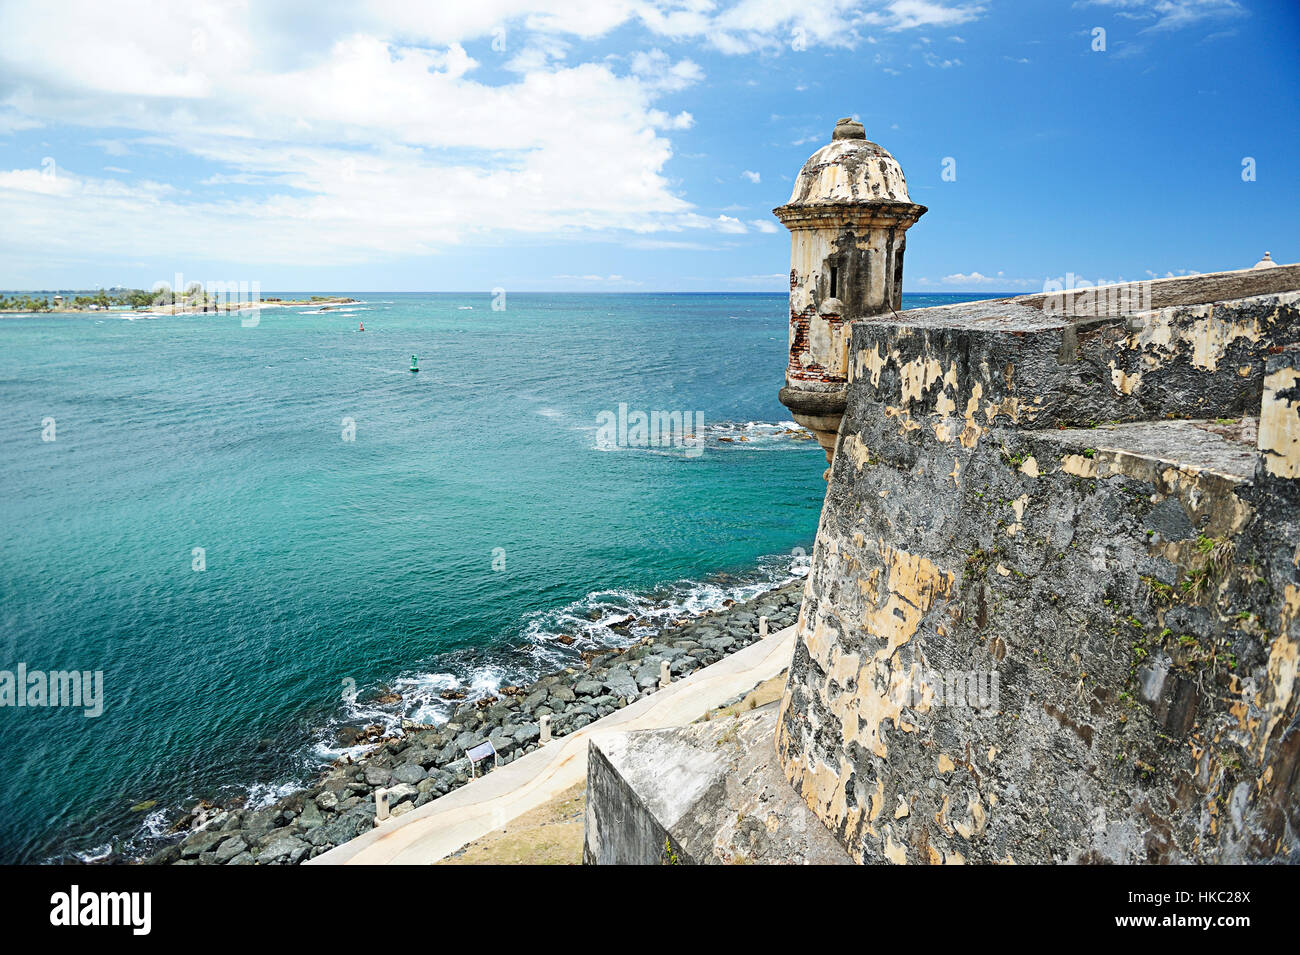 Fort in Puerto Rico coast Foto Stock